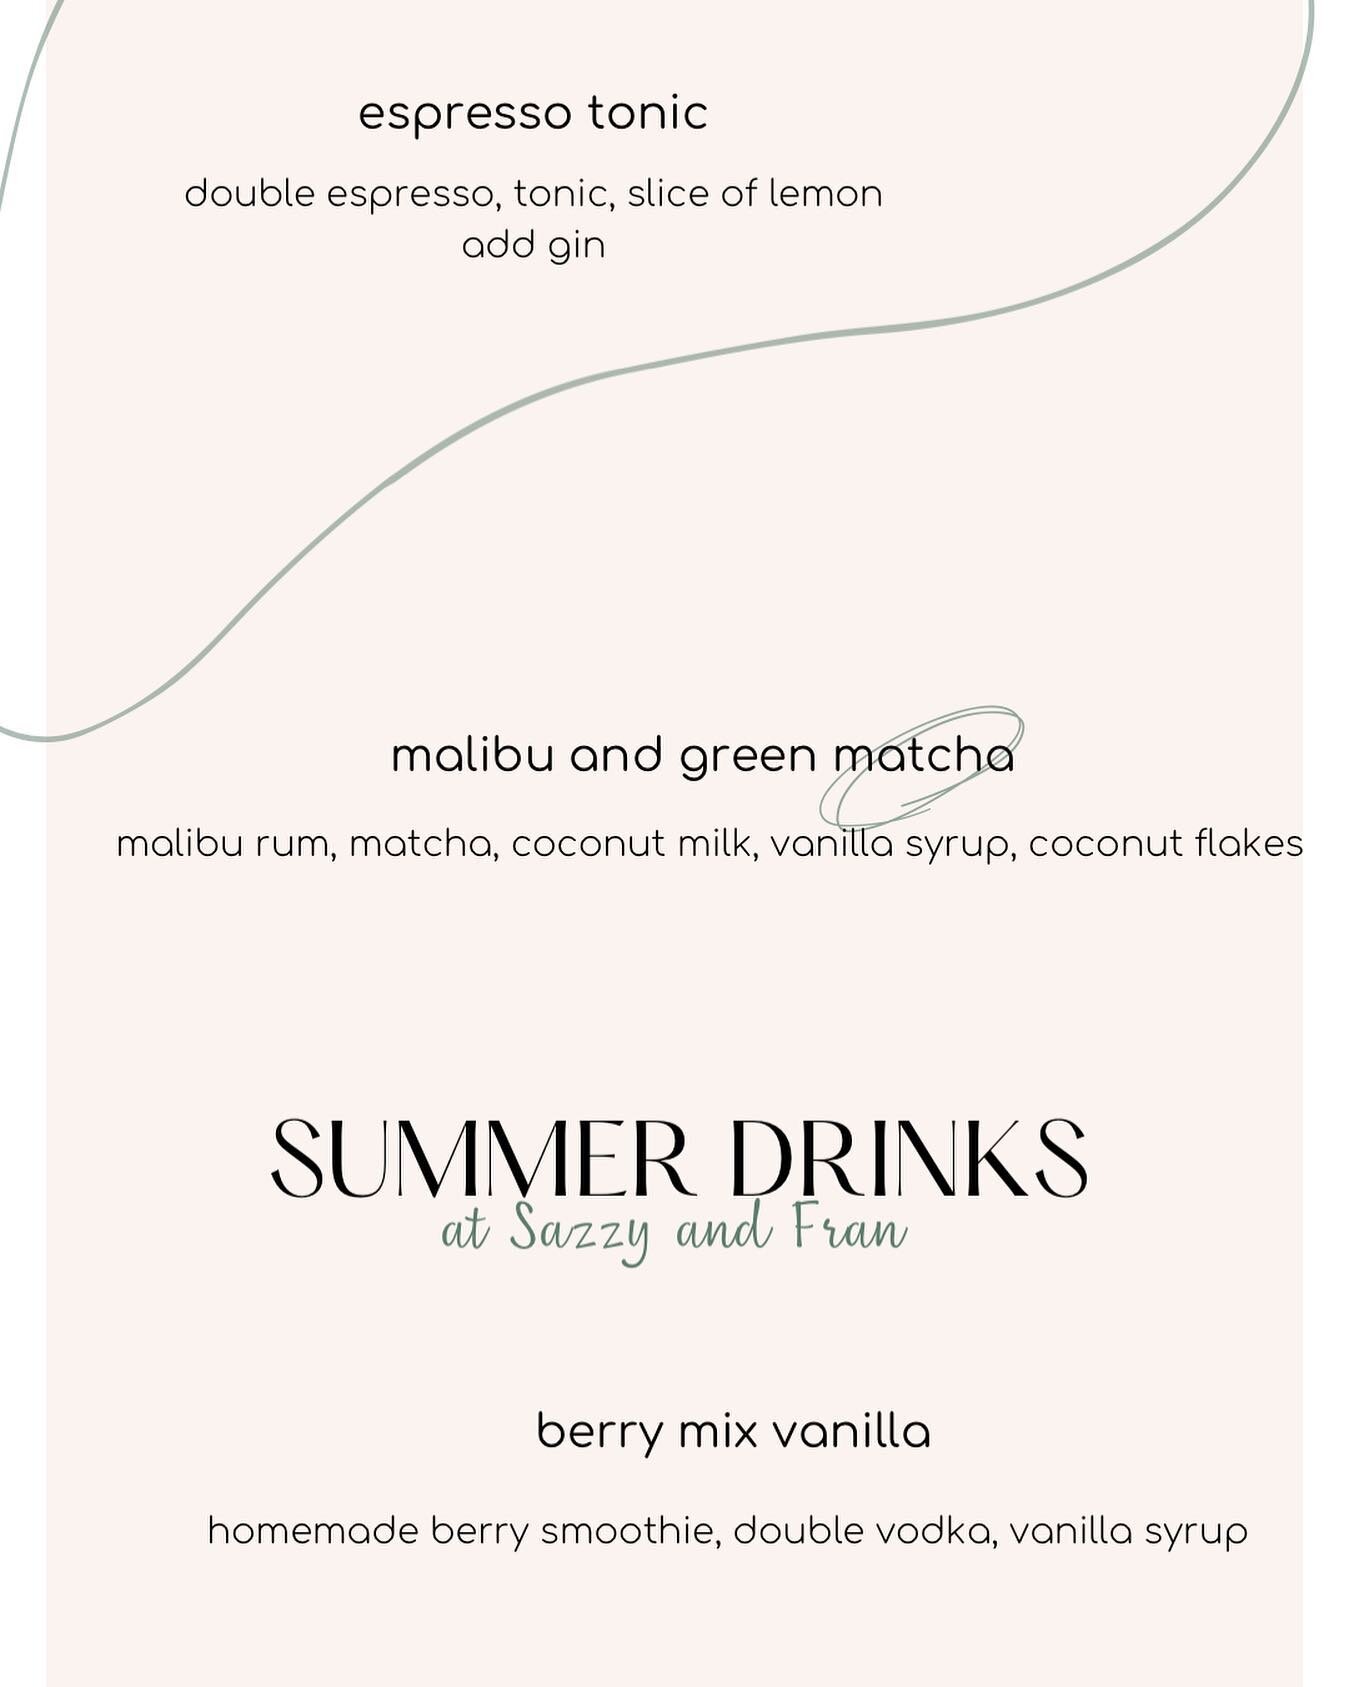 SUMMER DRINKS 
espresso tonic 🍋
malibu green matcha 🥥
berry mix vanilla 🍓

#summerdrinks #summer #drinks #cocktails #summervibes #foodie #food #drink #foodporn #drinkstagram #foodphotography #summertime #lemonade #yummy #mojito #mocktails #refresh